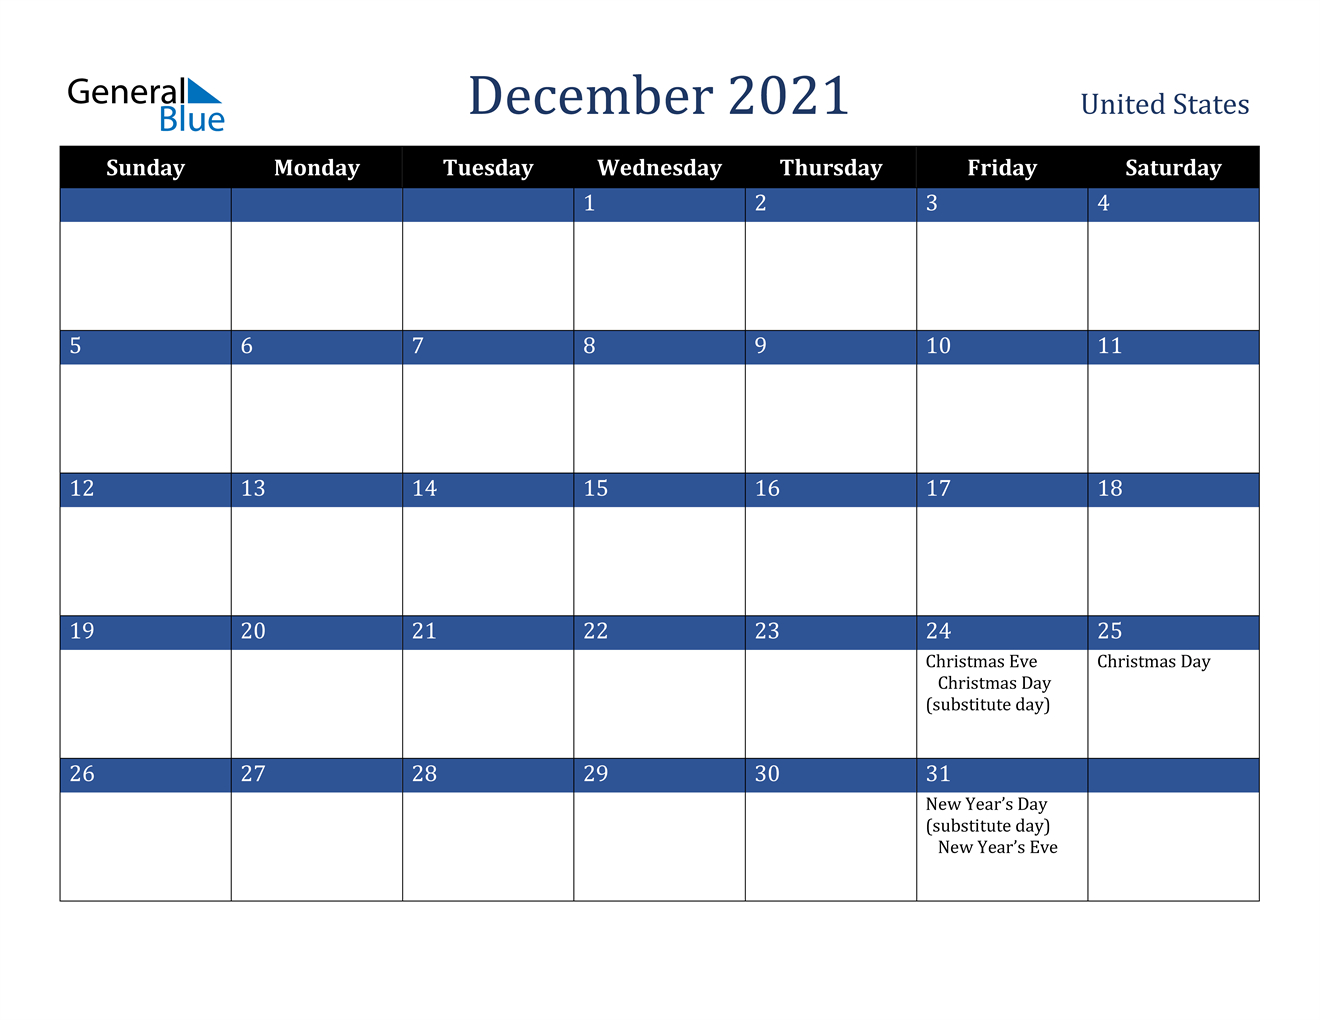 December 2021 Calendar - United States